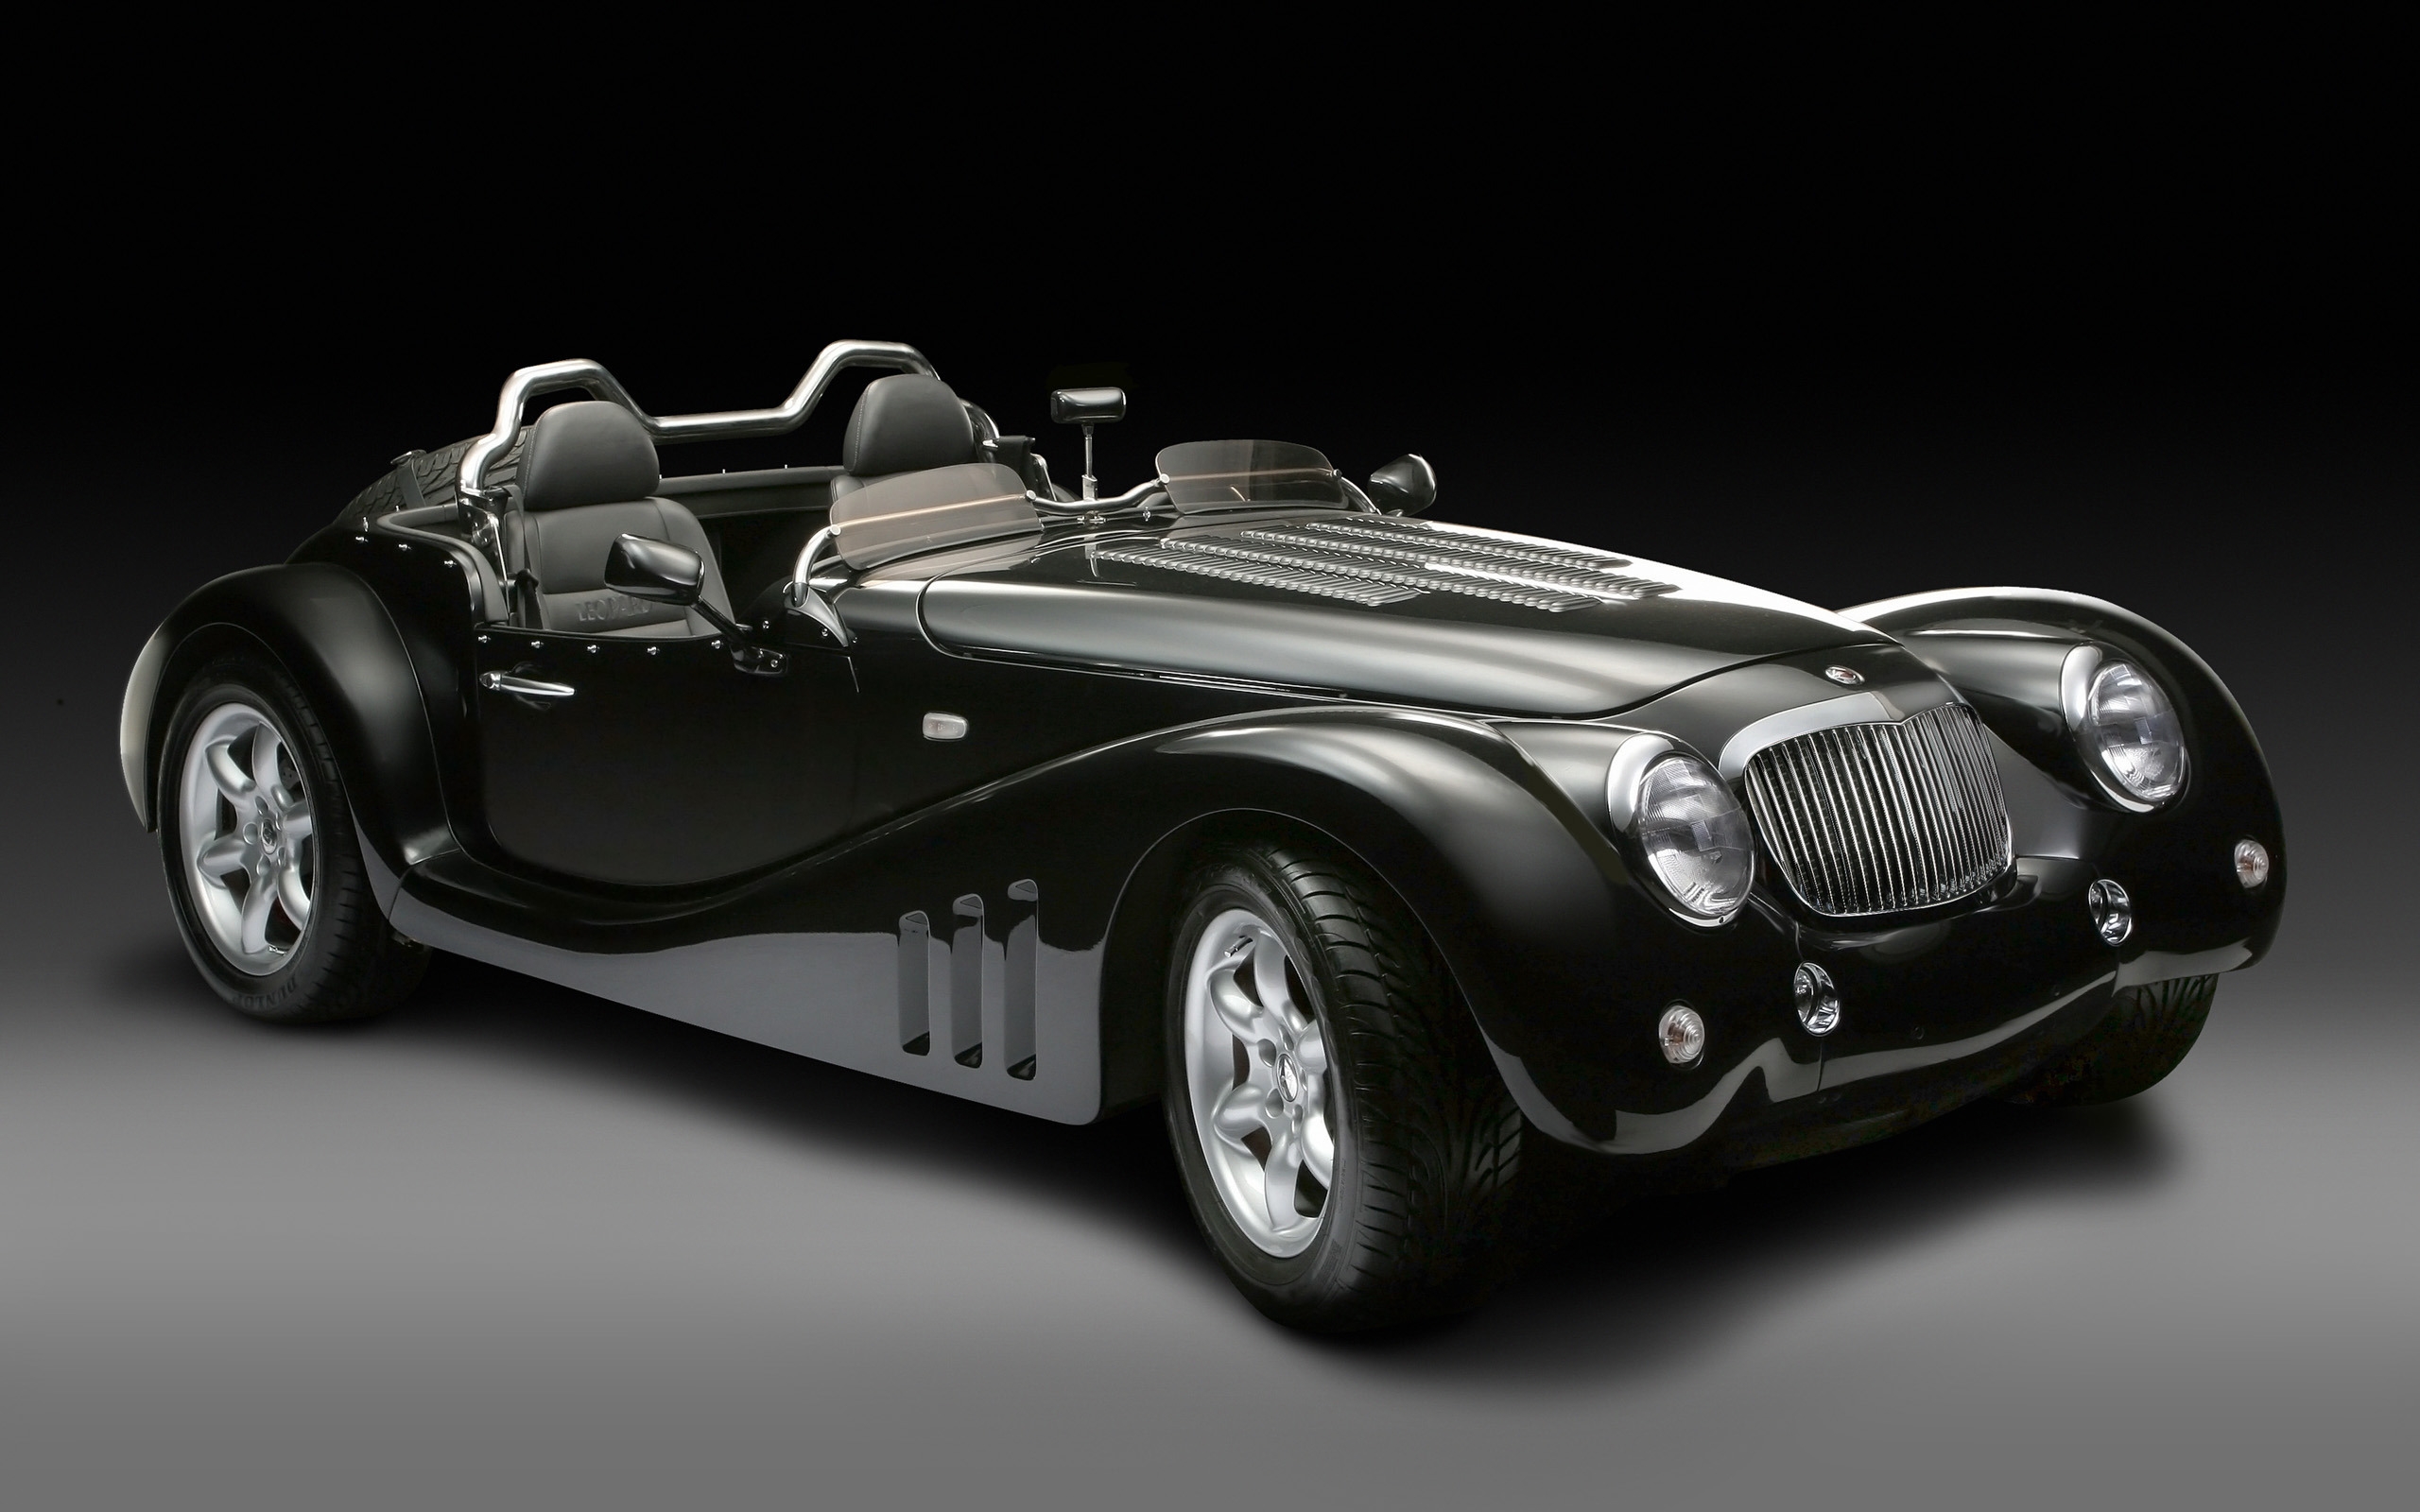 2013 Leopard Roadster Studio for 2560 x 1600 widescreen resolution